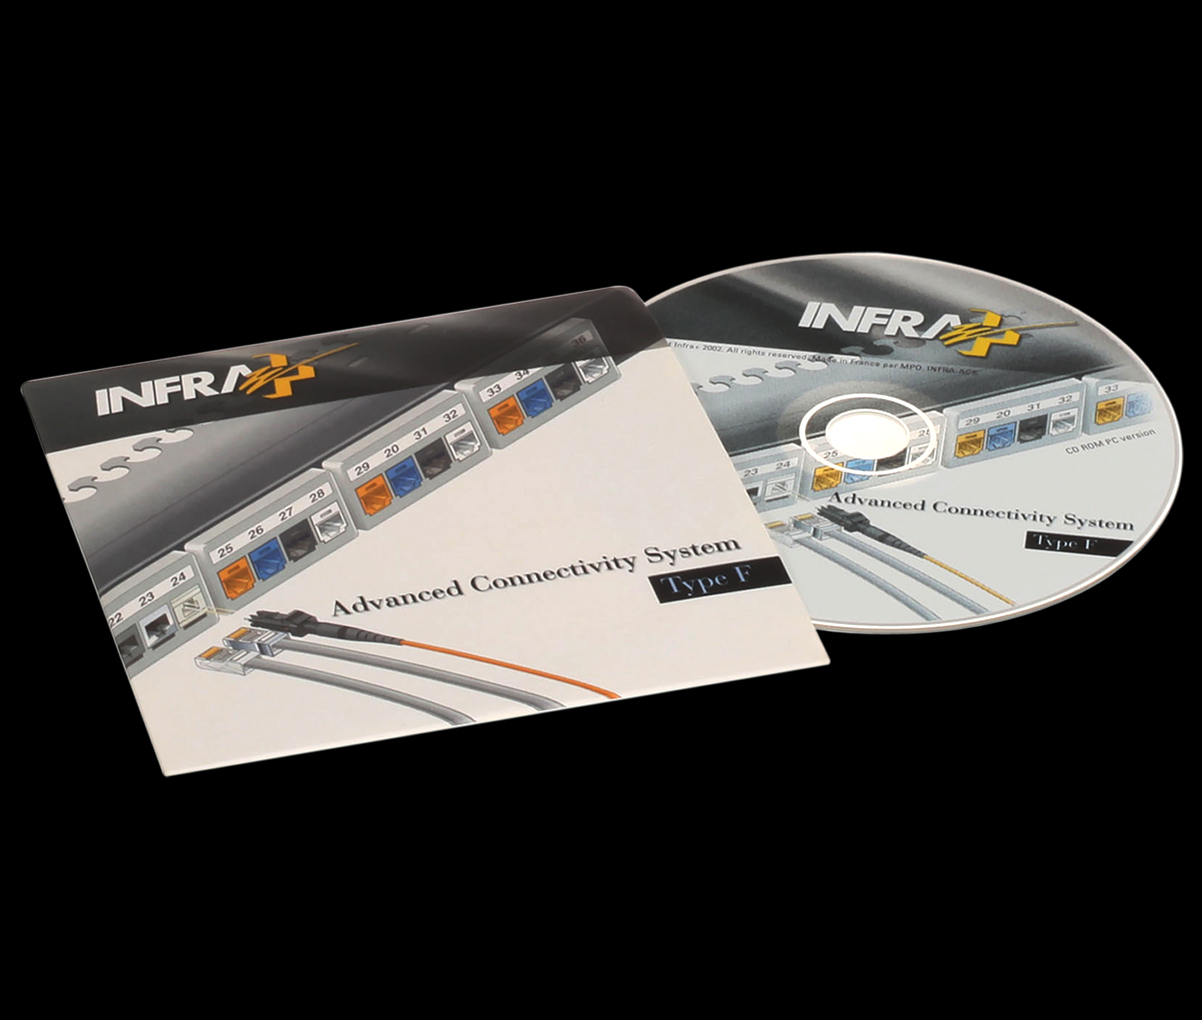 Infra+ product presentation CD-rom